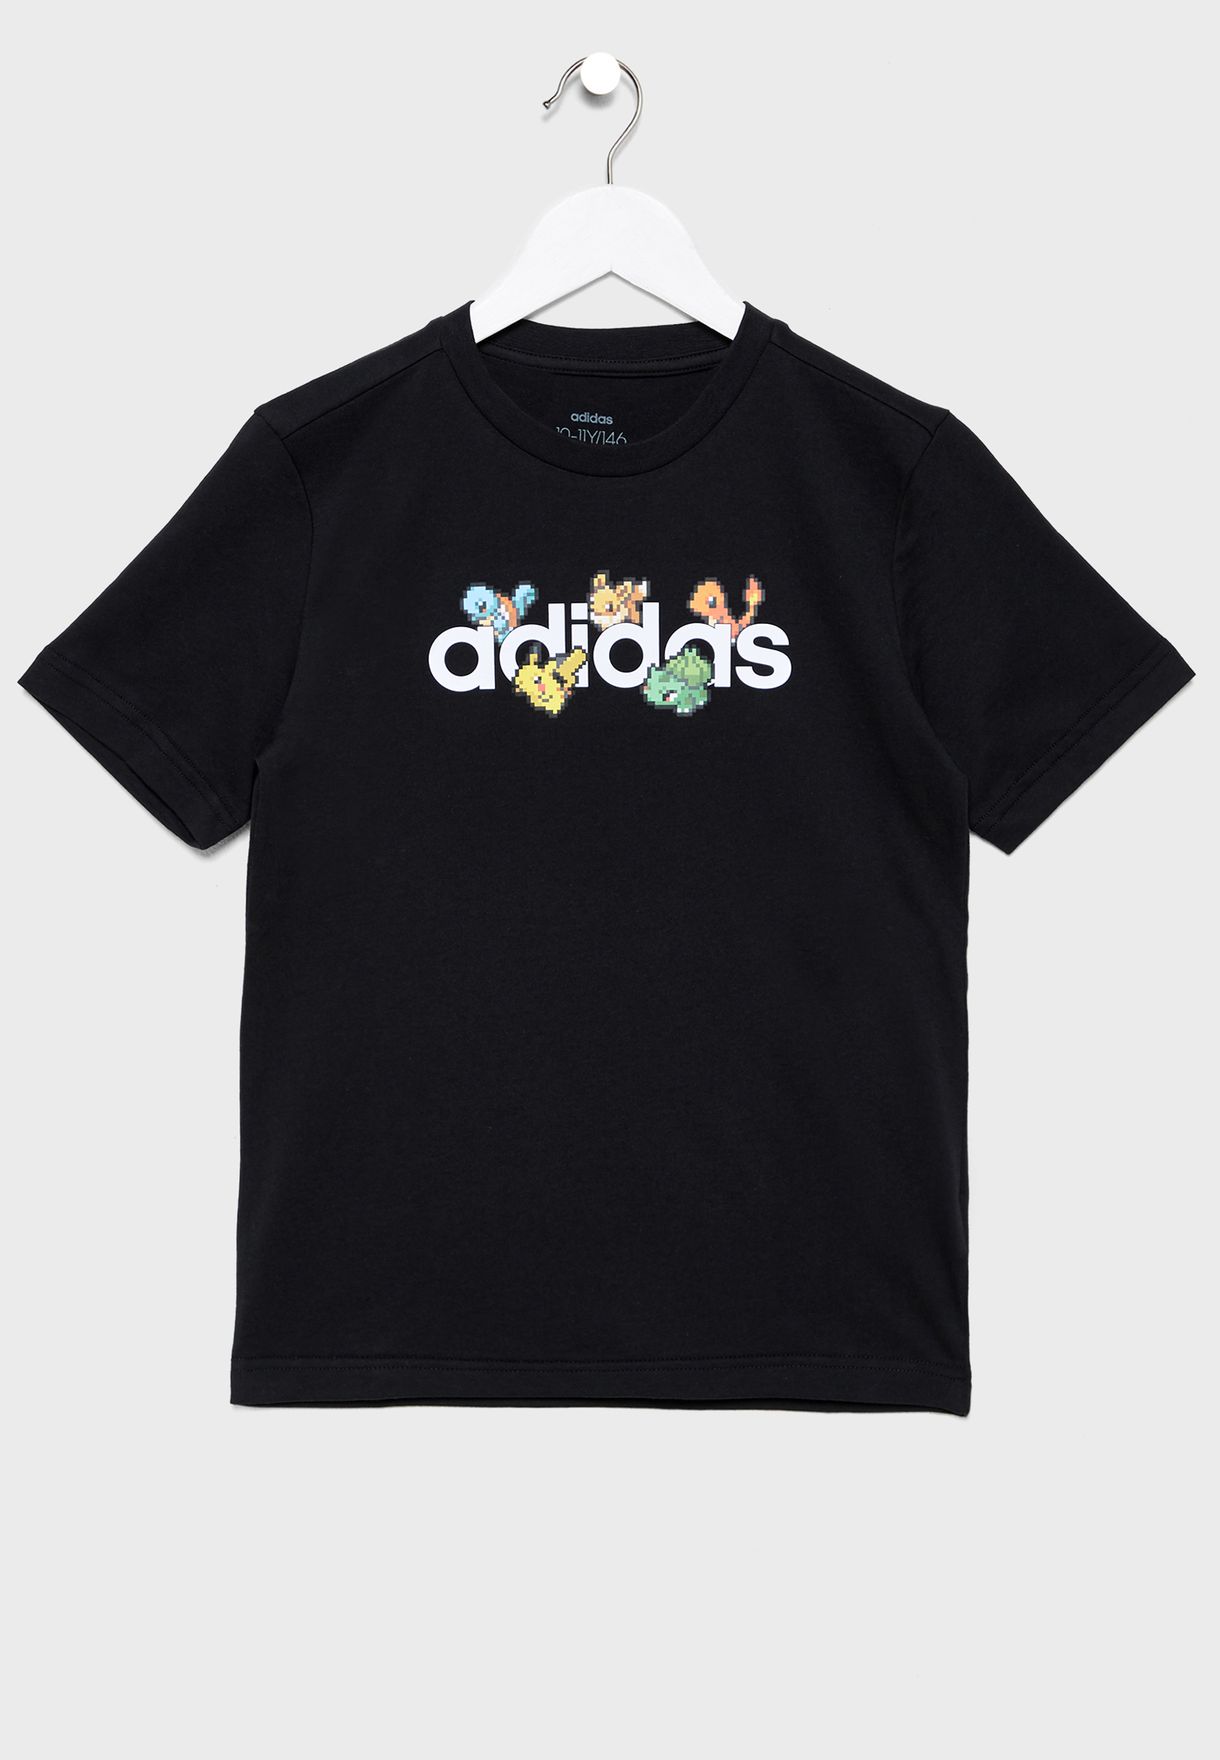 Calm material Have a bath Buy adidas black Youth Pokemon T-Shirt for Kids in Dubai, Abu Dhabi